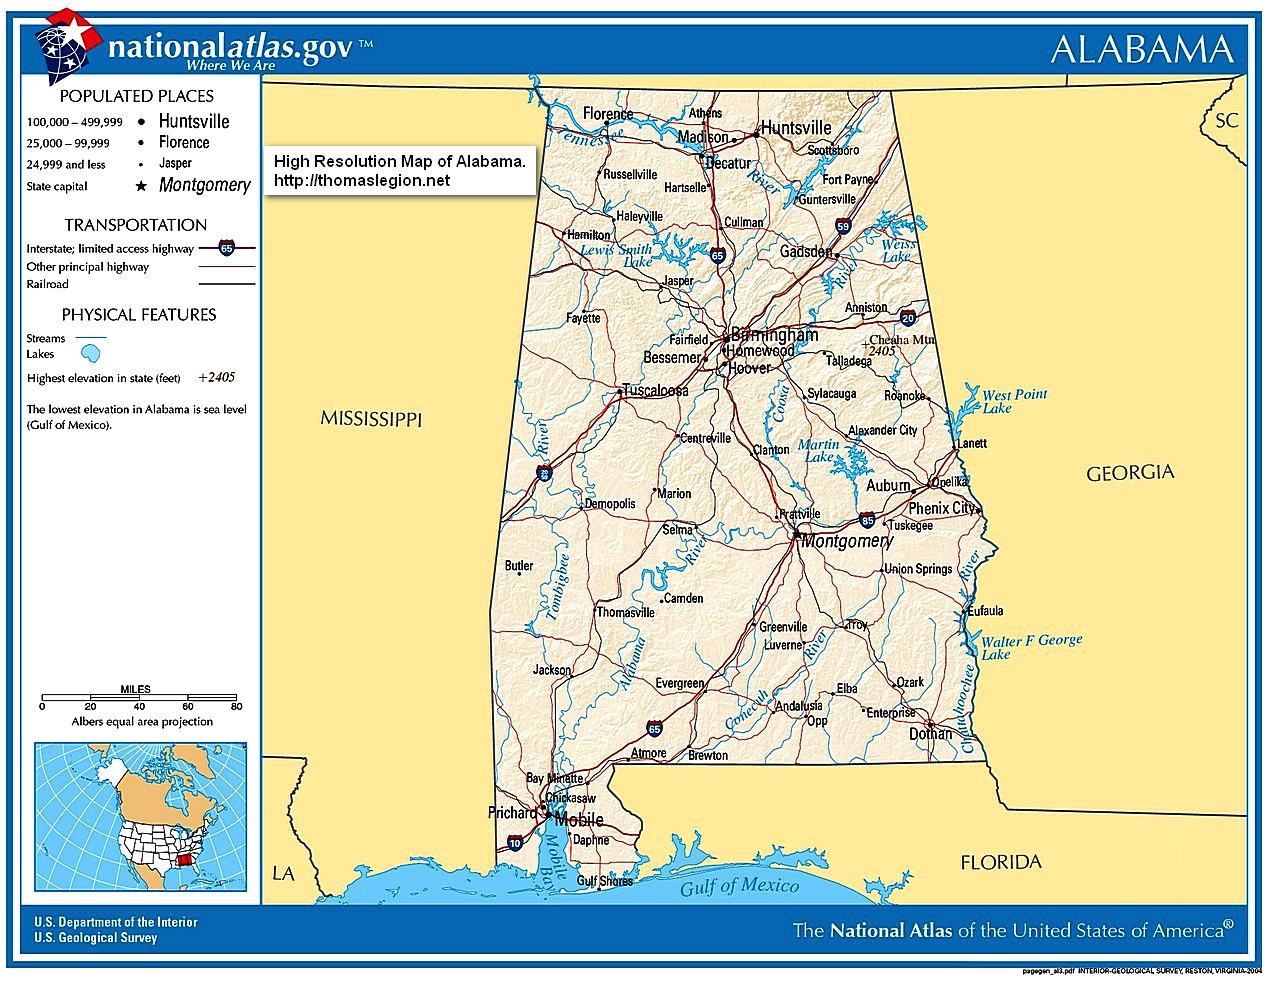 High Resolution Map of Alabama.jpg